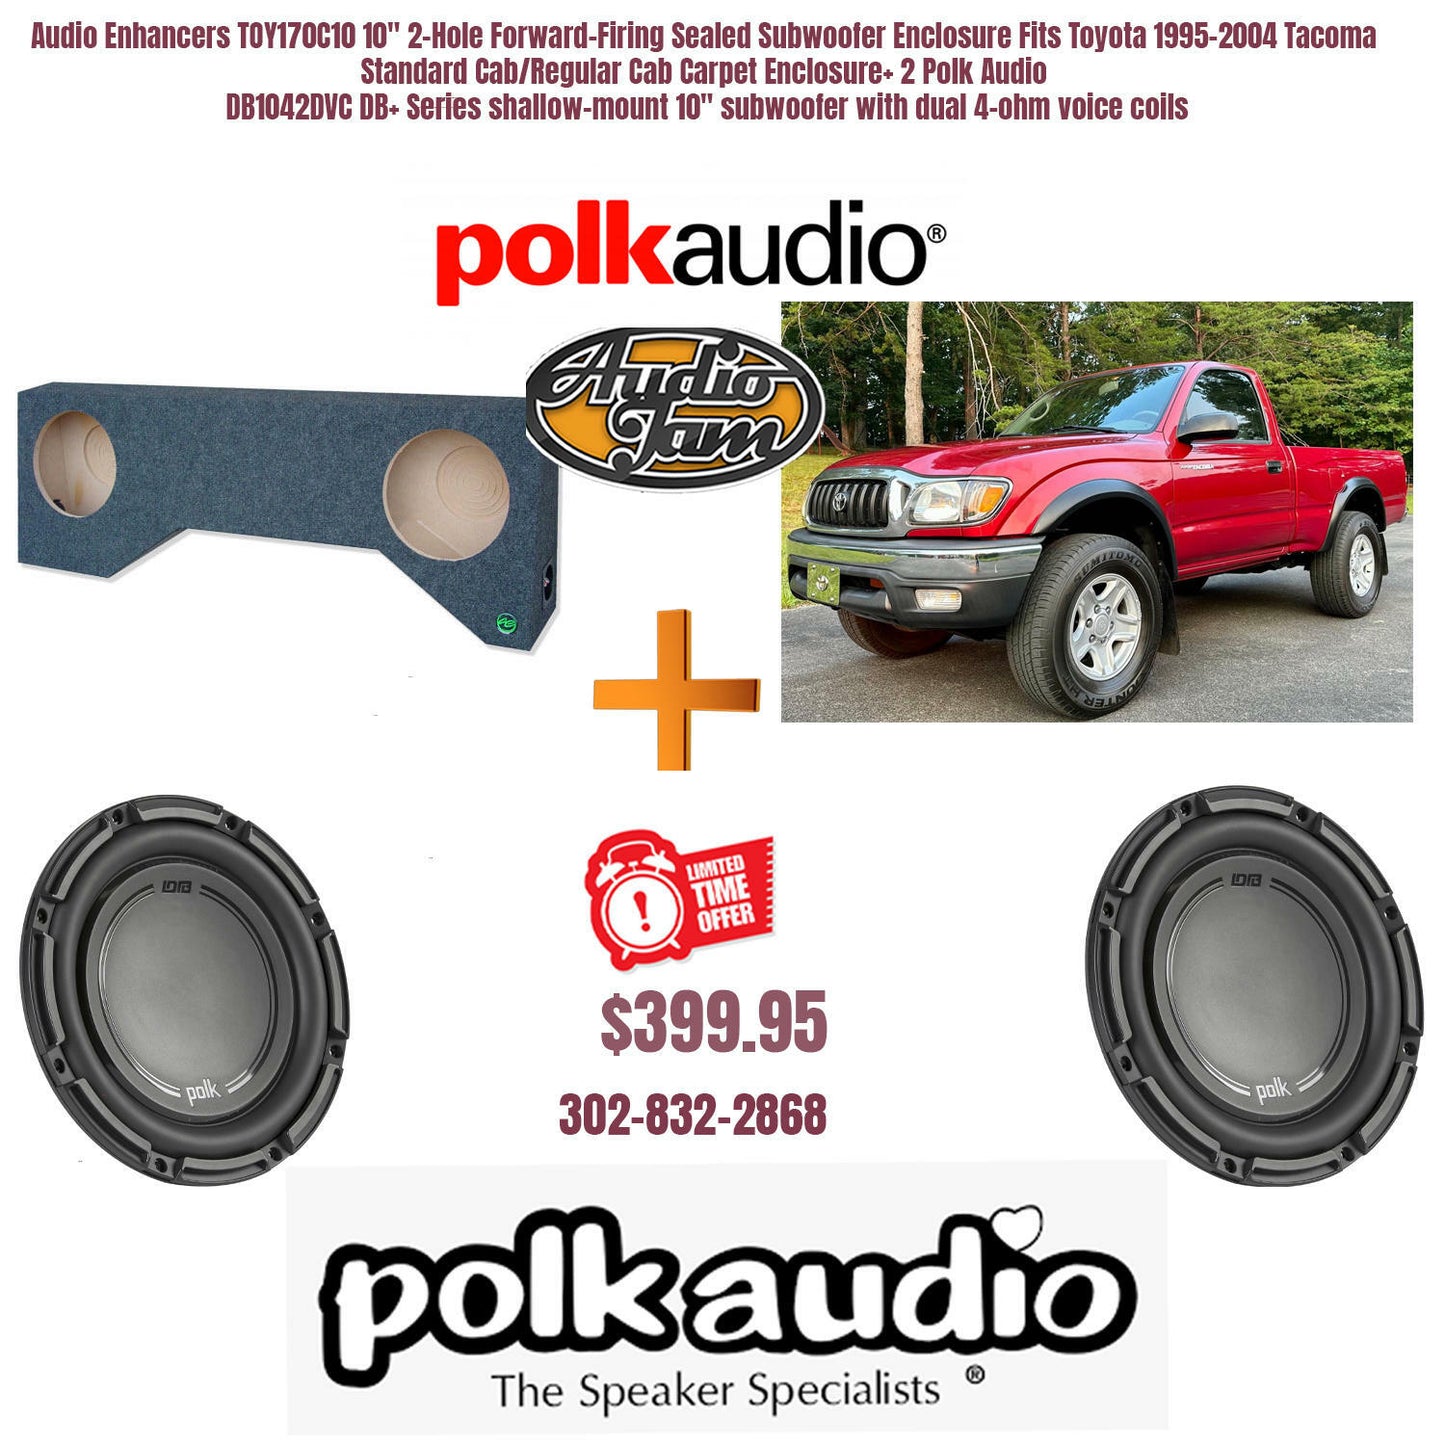 Audio Enhancers TOY170C10 10" 2-Hole Forward-Firing Sealed Subwoofer Enclosure Fits Toyota 1995-2004 Tacoma Standard Cab/Regular Cab Carpet Enclosure+ 2 Polk Audio DB1042DVC DB+ Series shallow-mount 10" subwoofer with dual 4-ohm voice coils